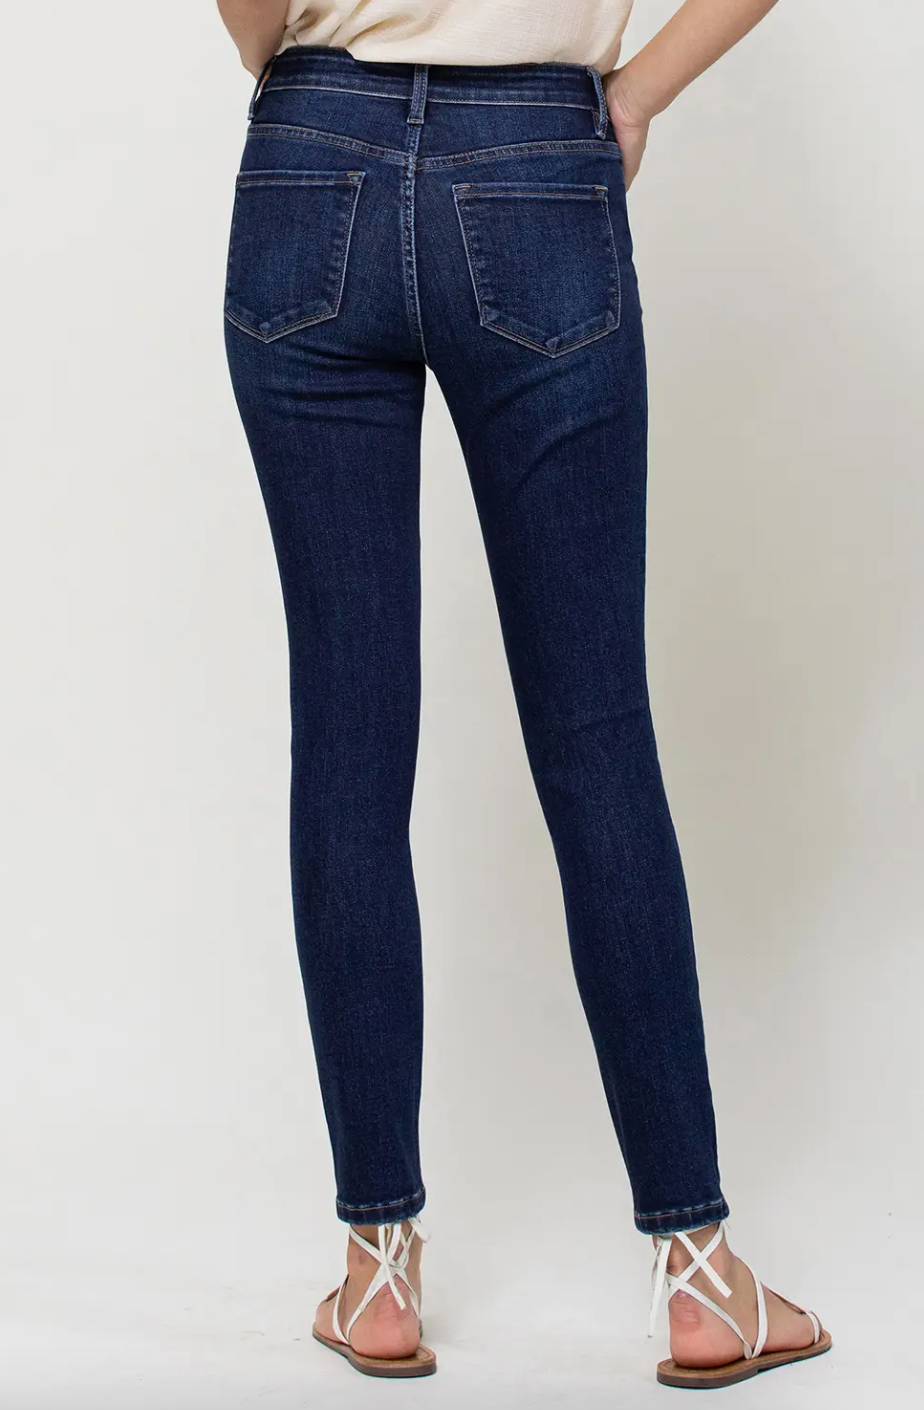 The Staple Skinny Jeans by Vervet - Dark Wash